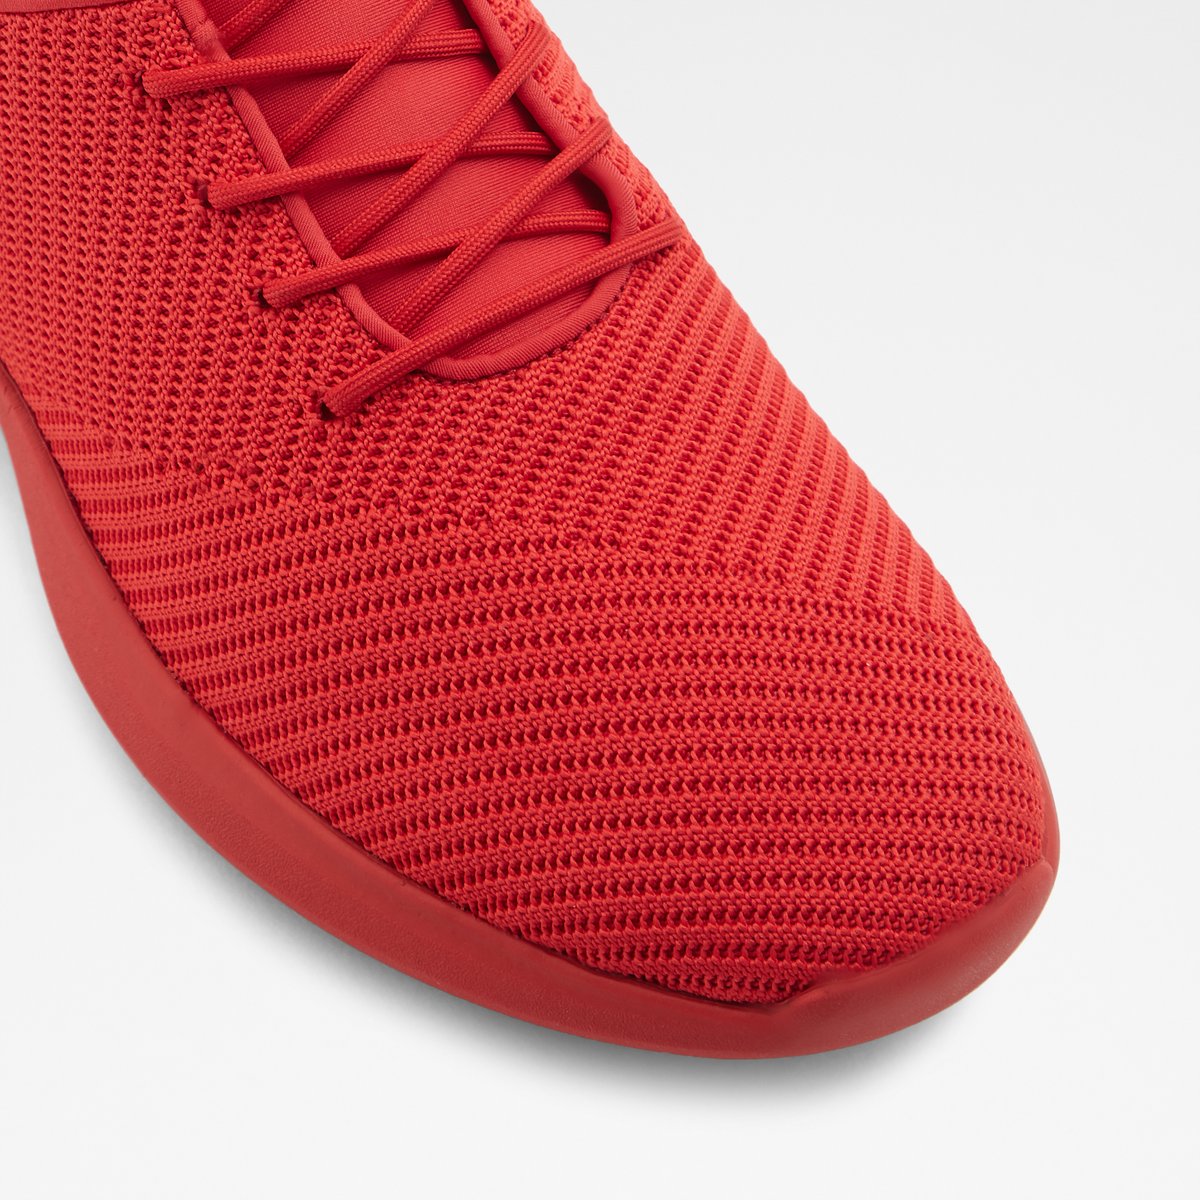 red sneakers aldo